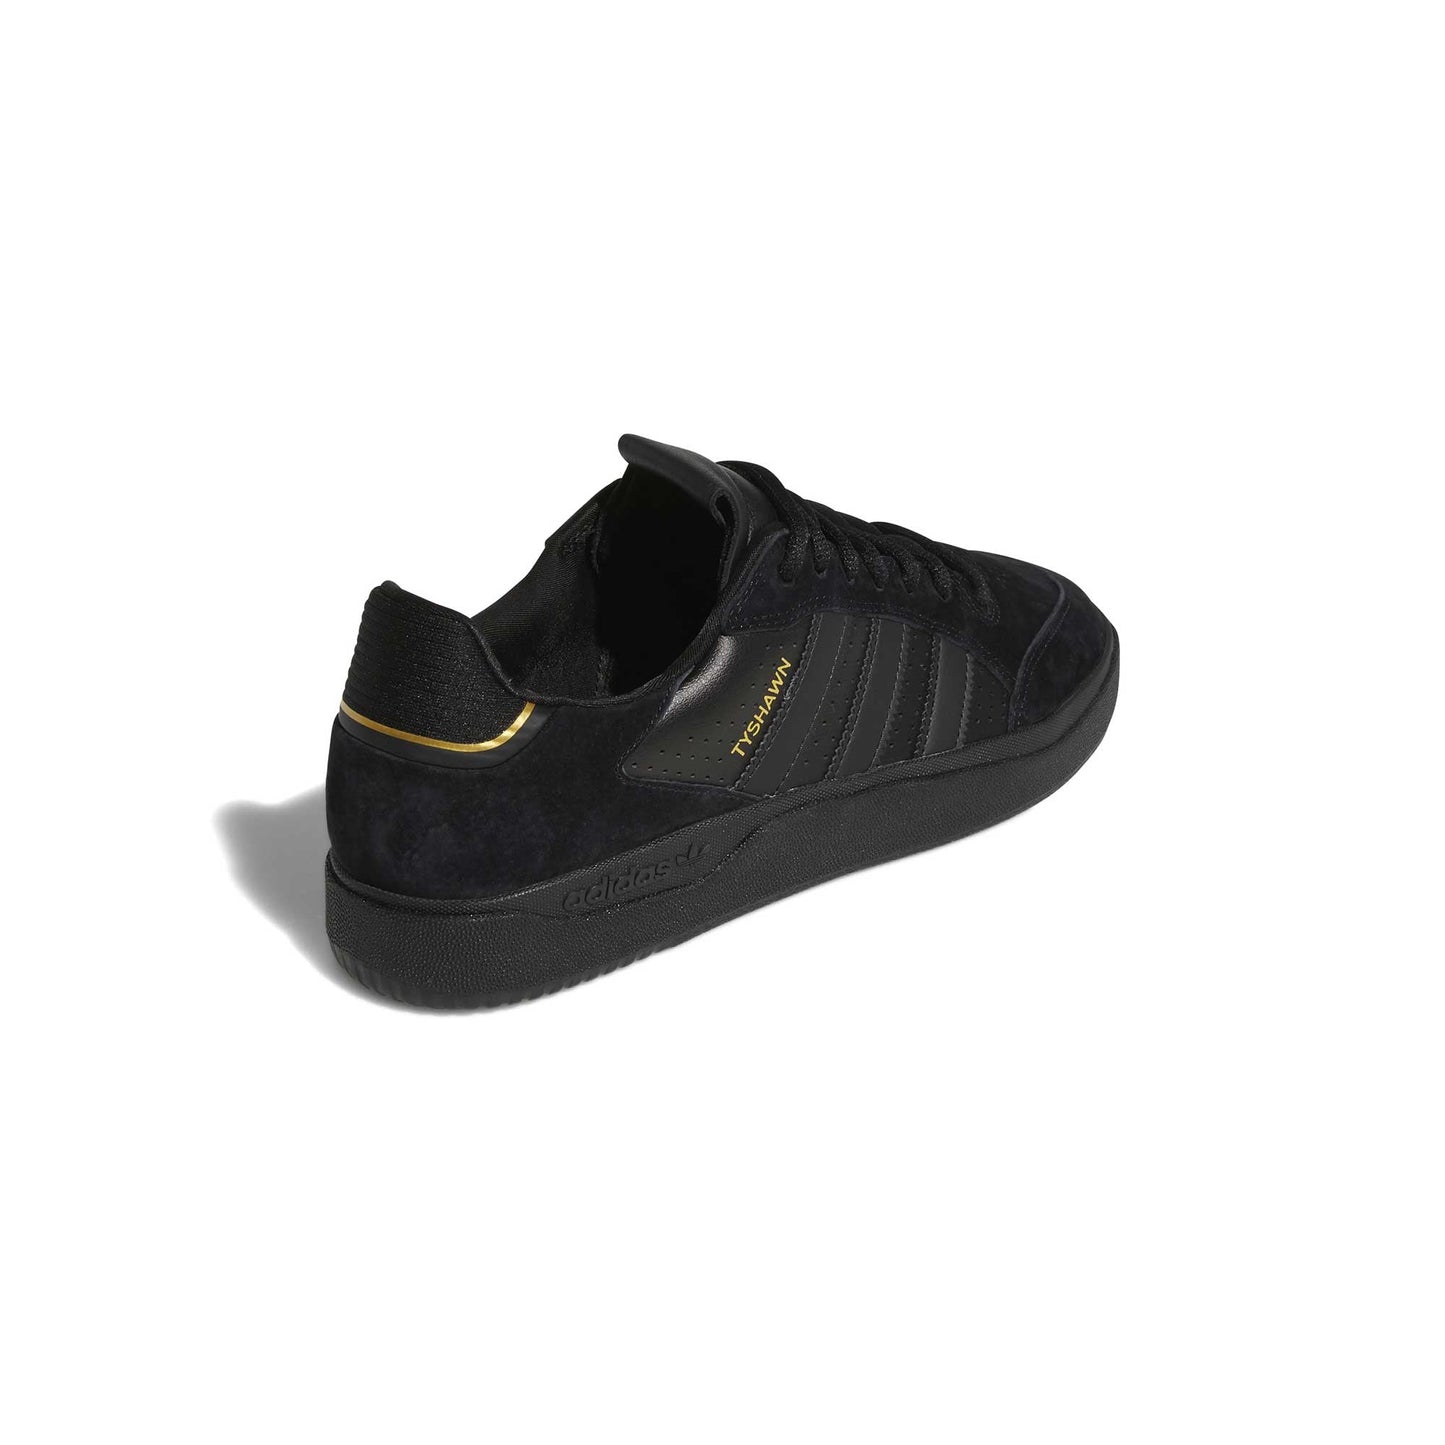 Adidas Tyshawn Low, core black / core black / gold metallic - Tiki Room Skateboards - 7